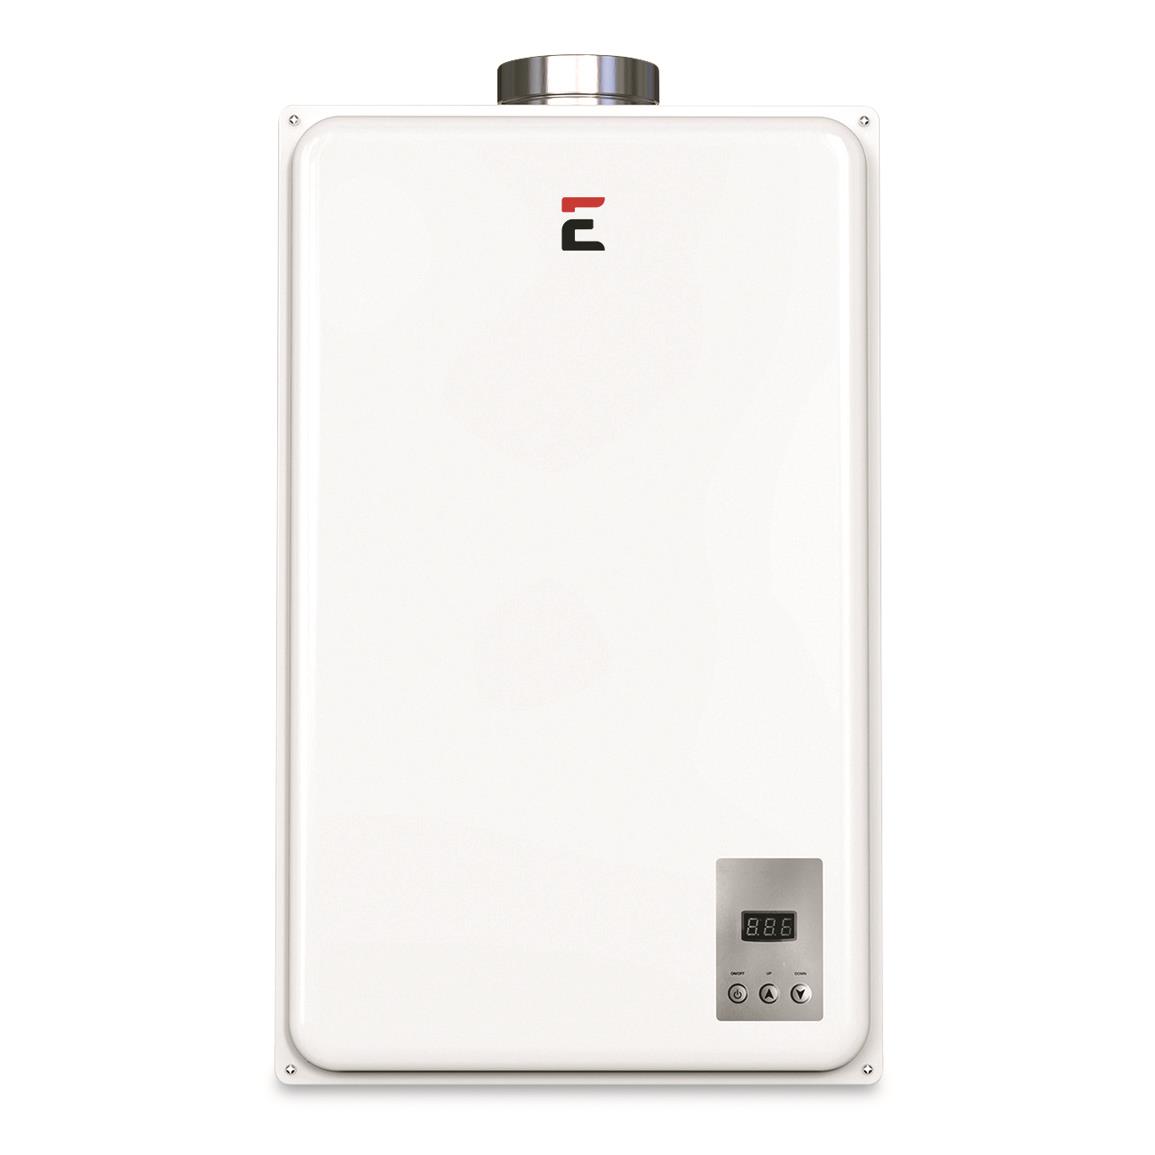 Eccotemp 45H-NG Tankless Water Heater